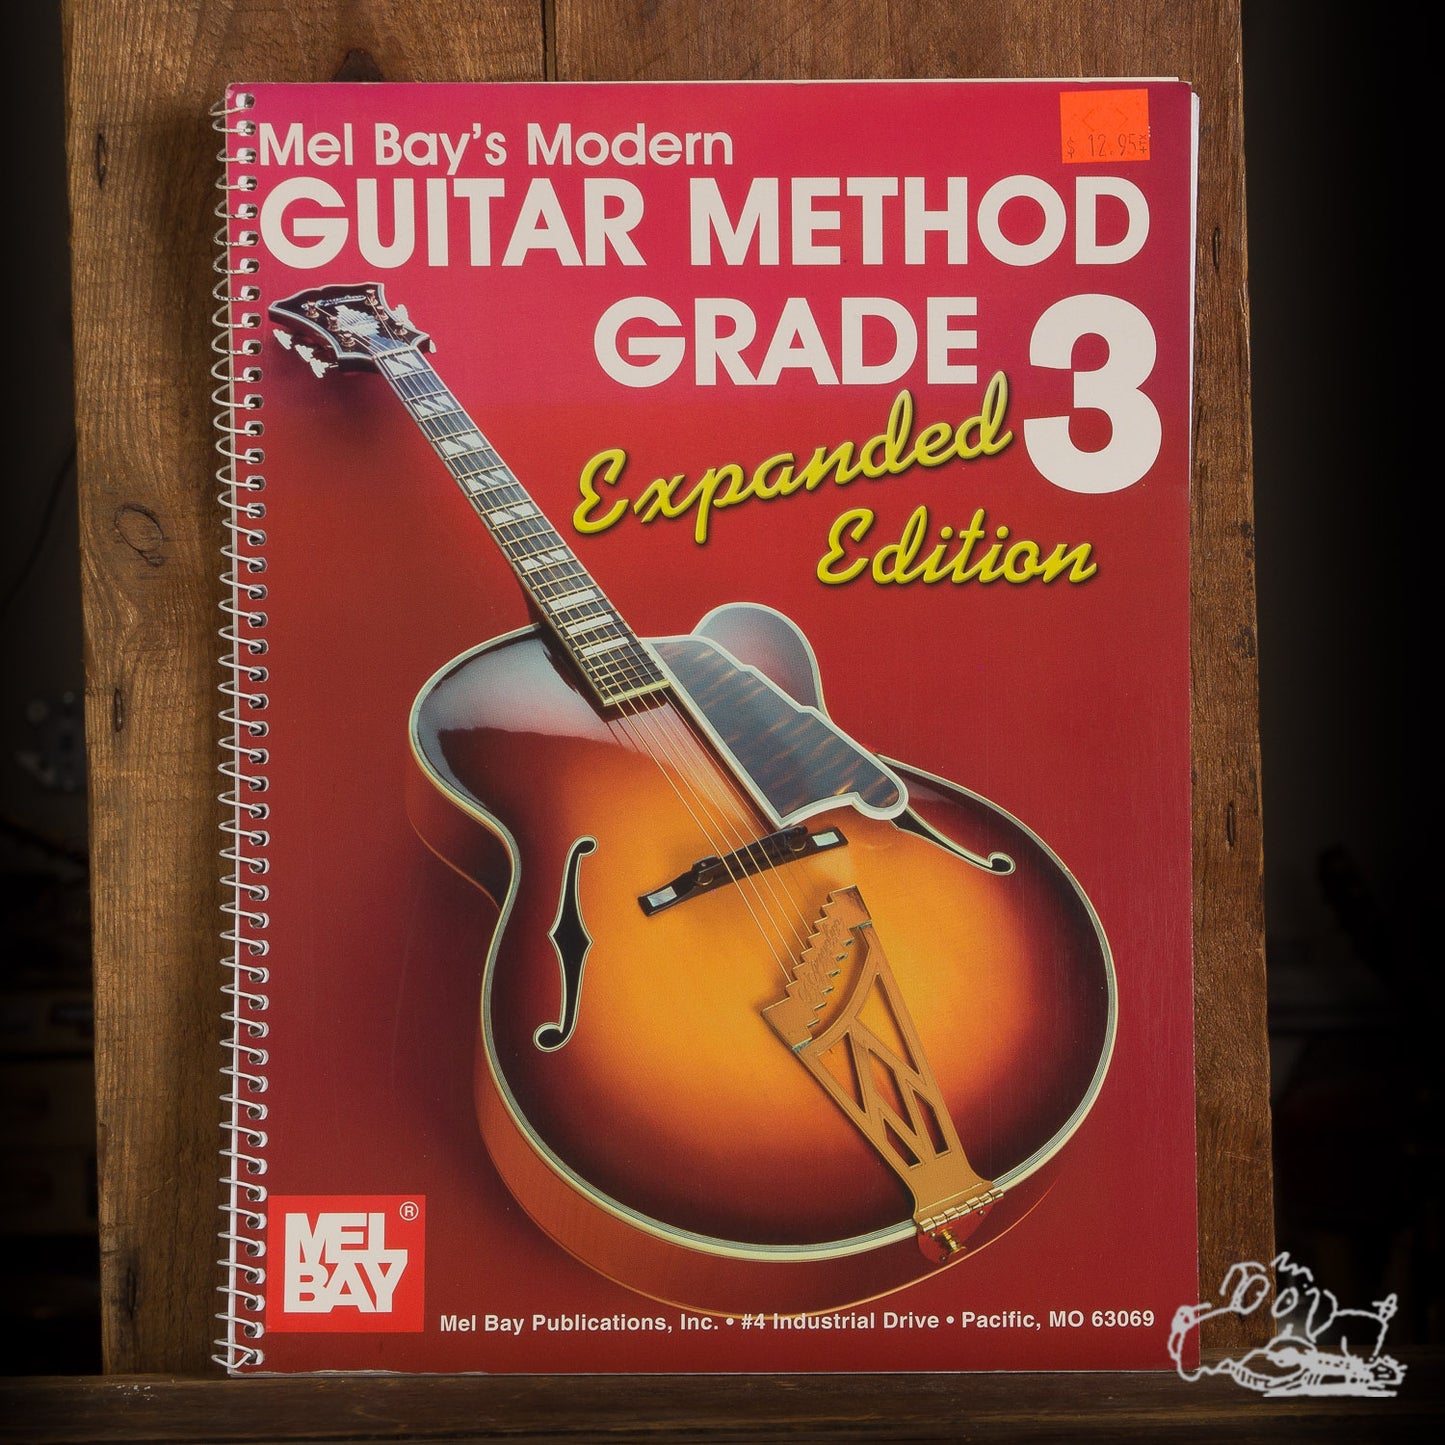 Mel Bay's Modern Guitar Method Grade 3: Expanded Edition